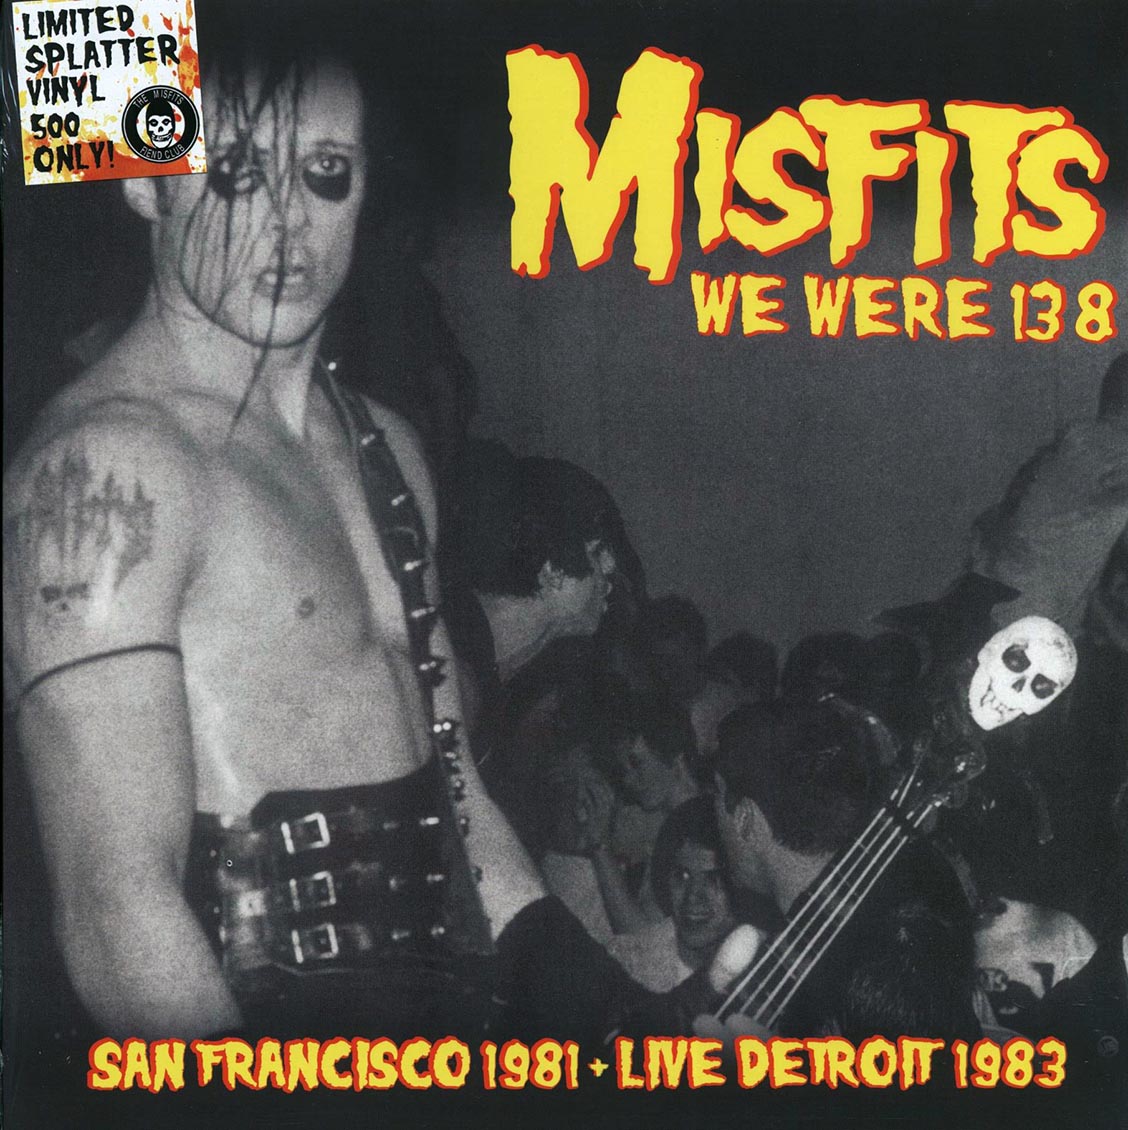 Misfits - We Were 138: San Francisco 1981 + Detroit 1983 (ltd. 500 copies made) (splatter vinyl) - Vinyl LP